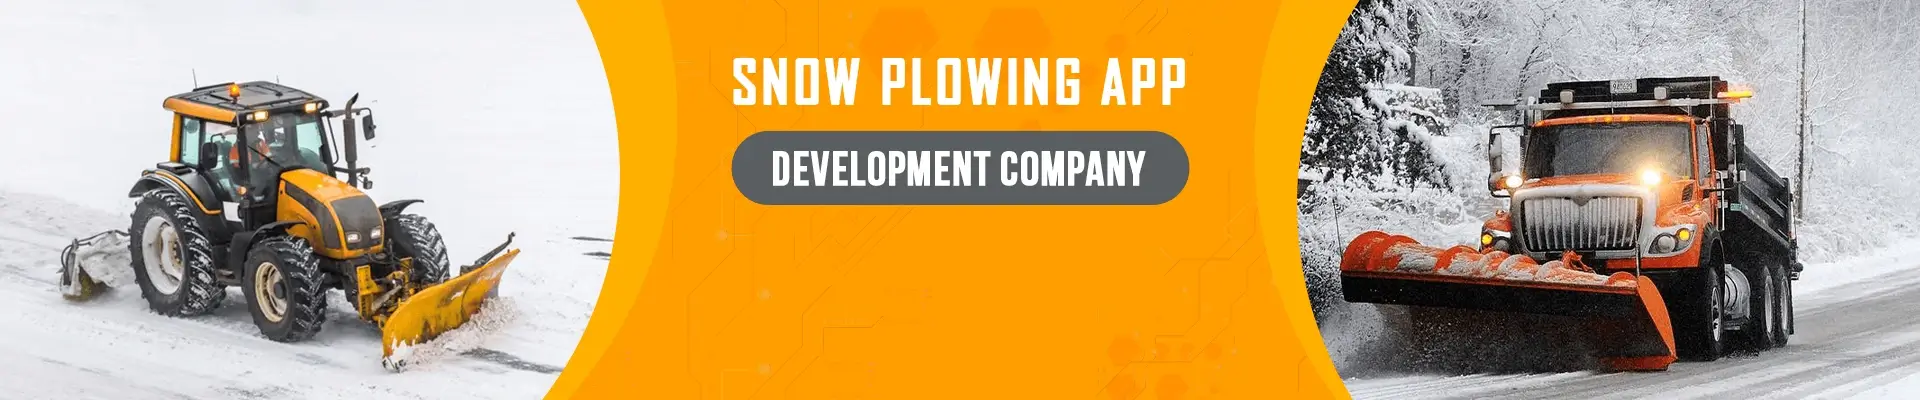 Top Snow Plowing App Development Company | Snow Plowing App Developer For Hire